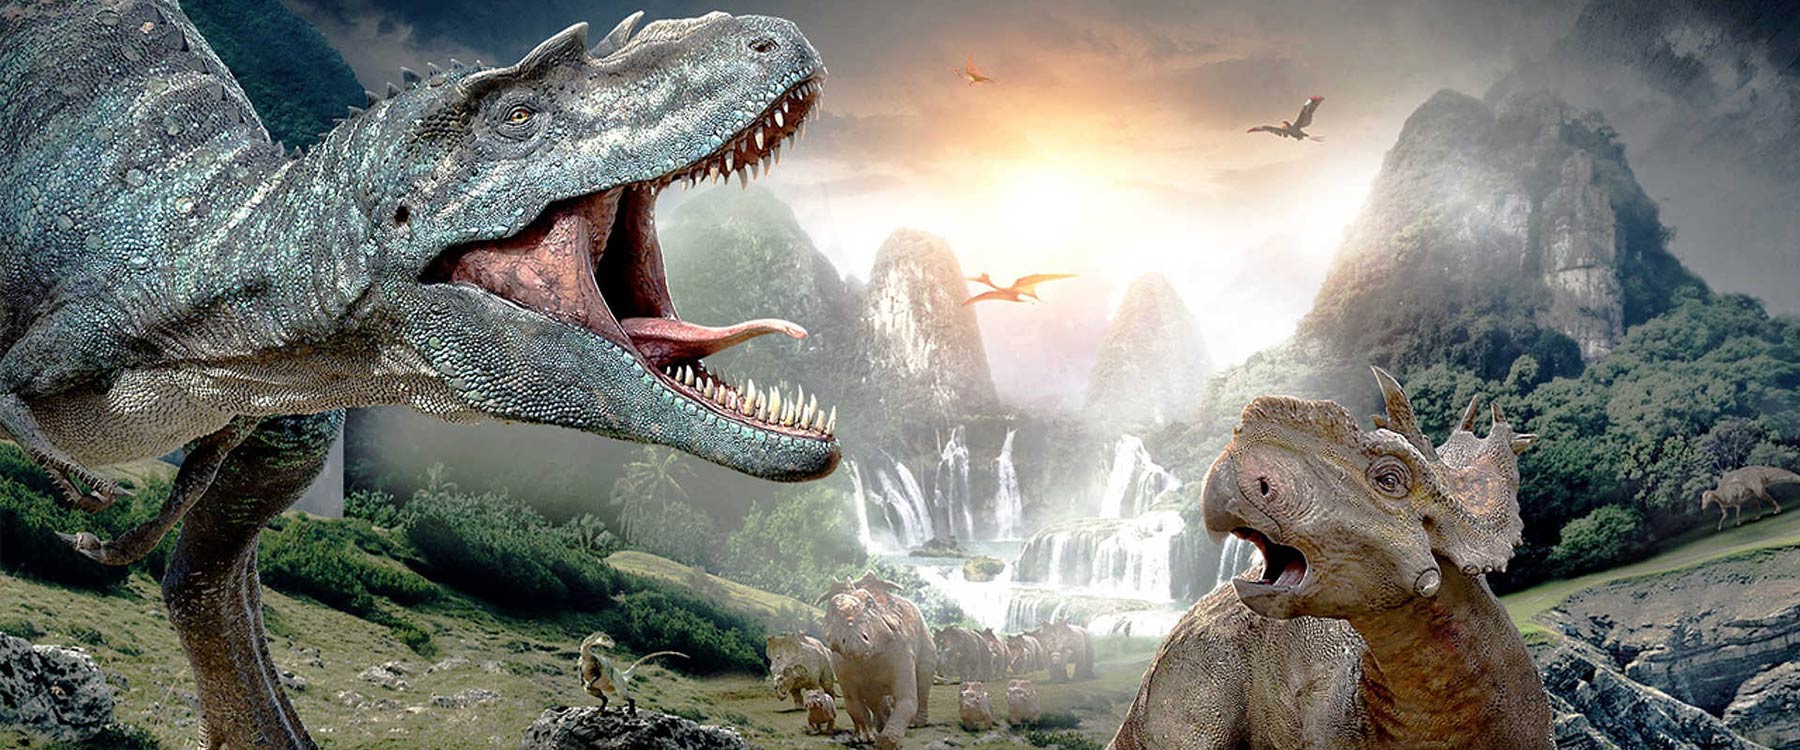 Dinoszauruszok, a Föld urai (Walking with Dinosaurs)